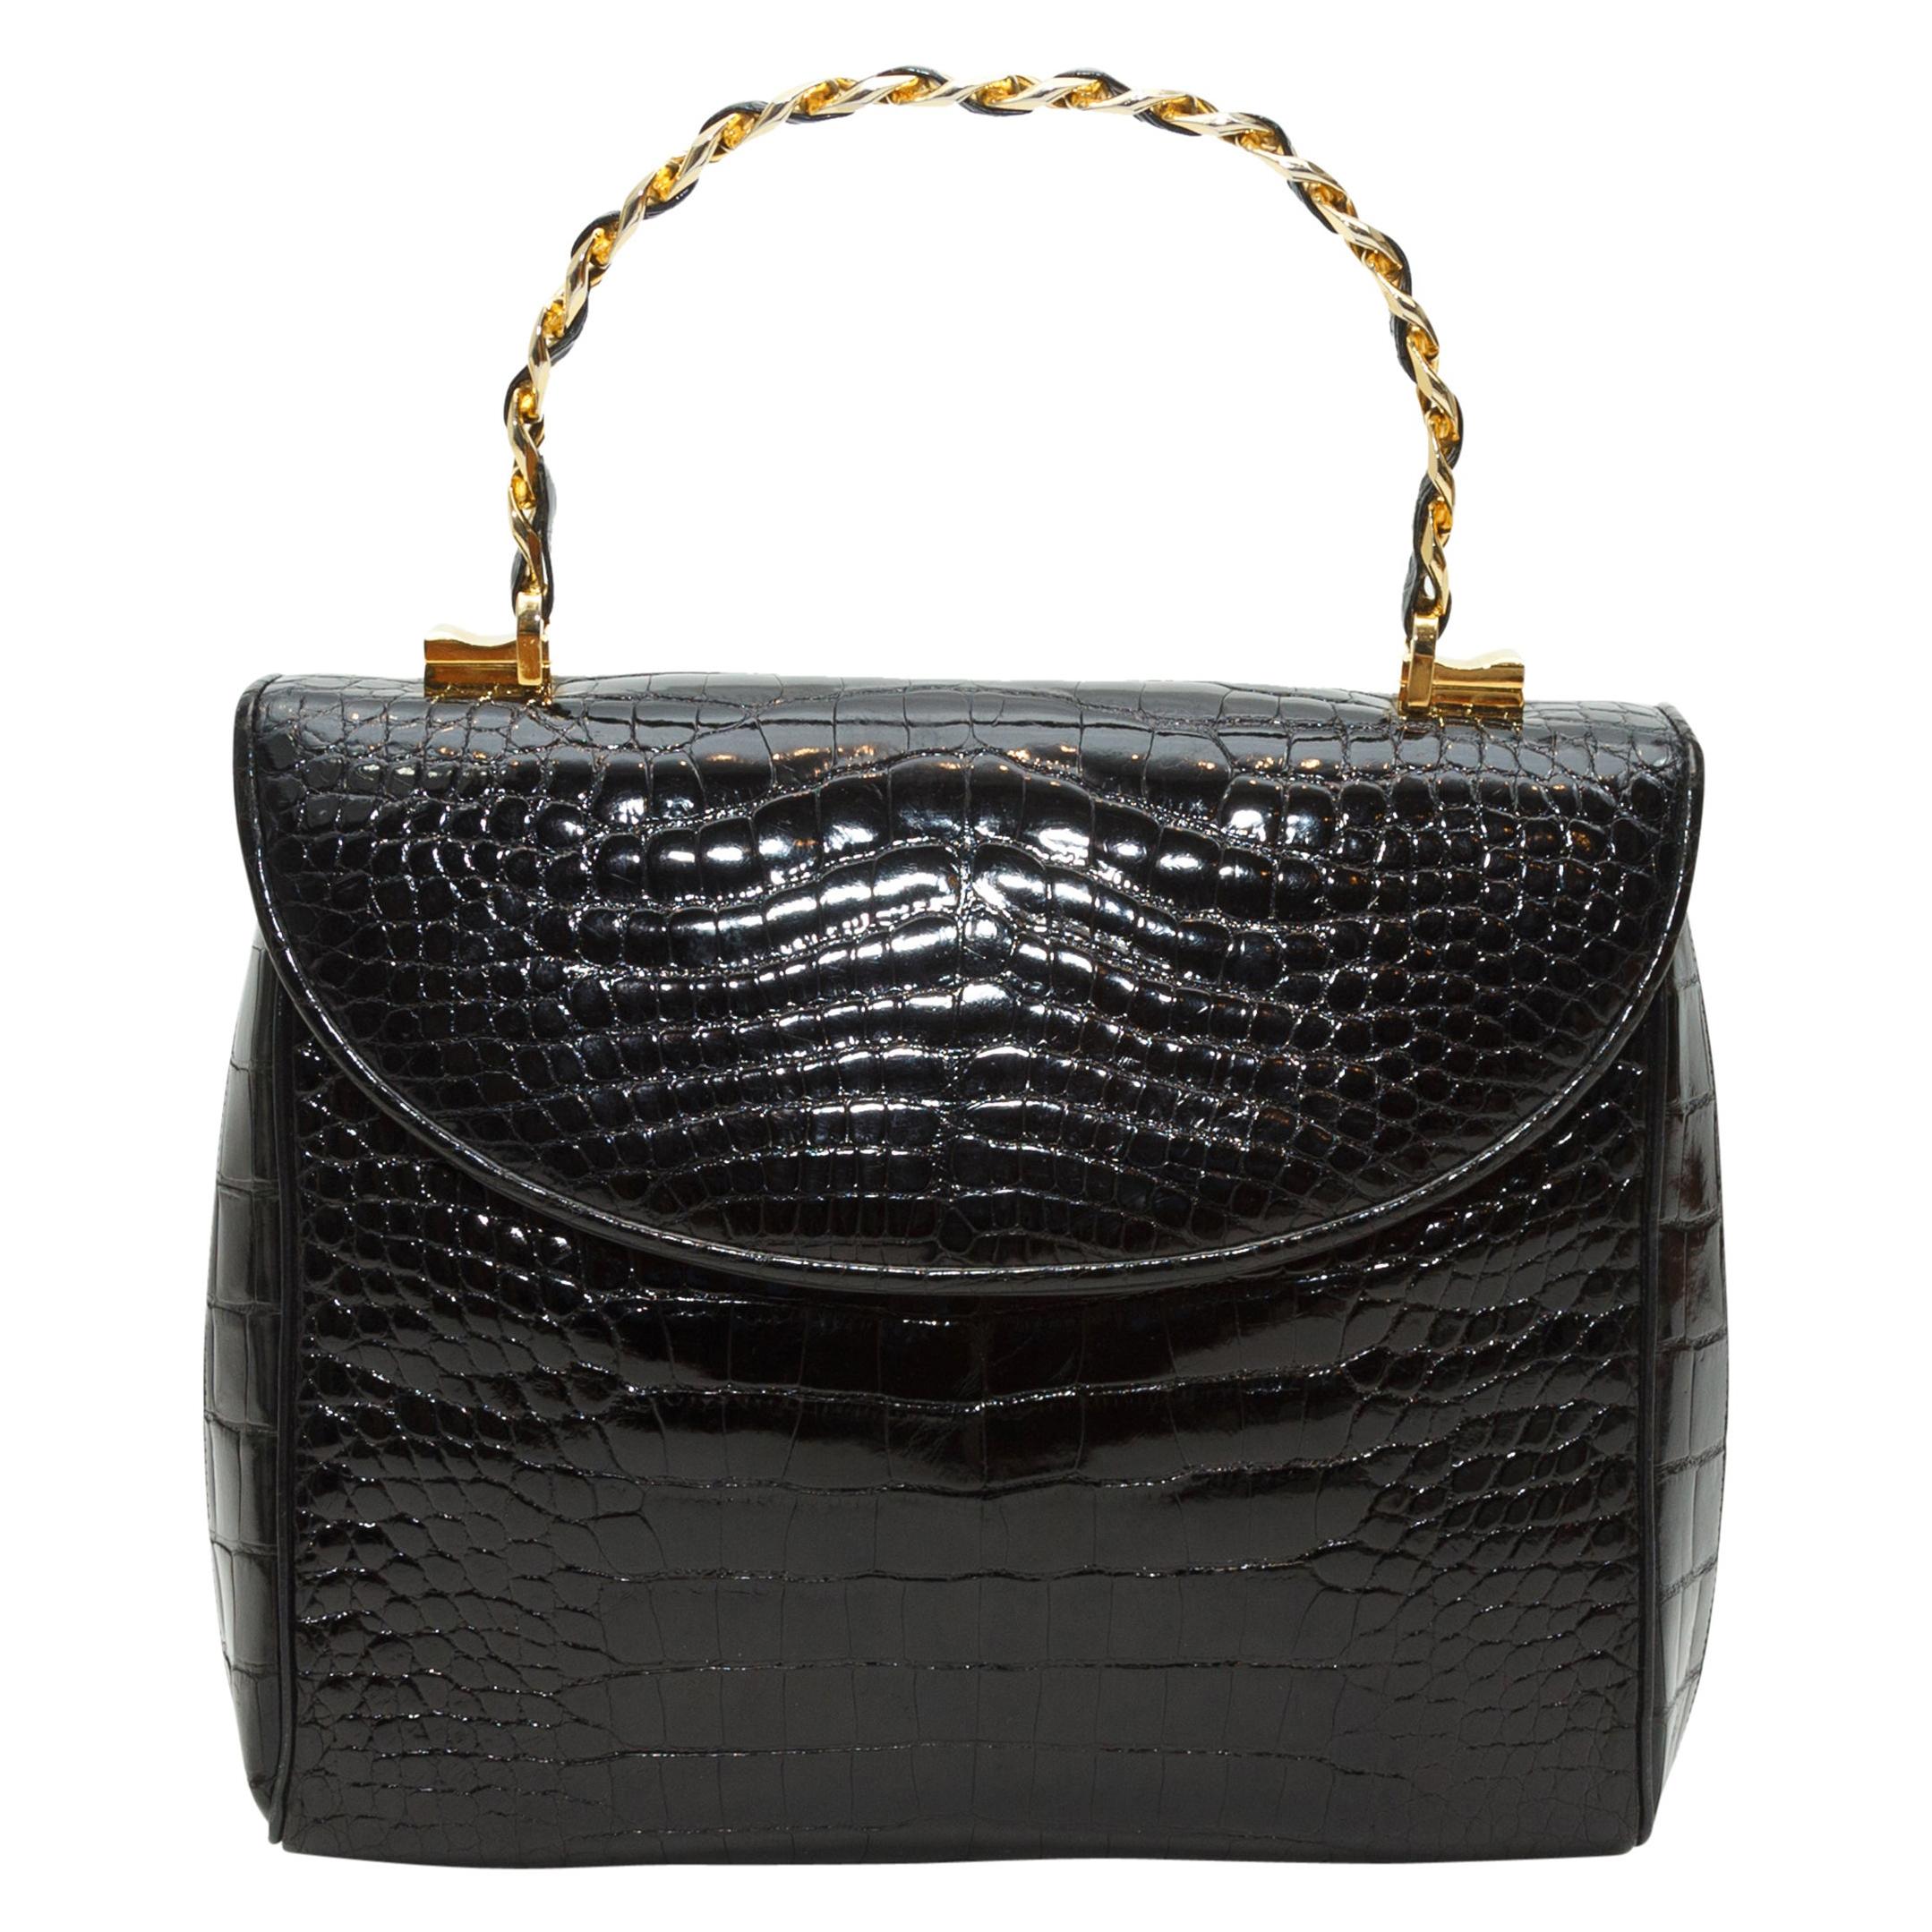 Judith Leiber Black Alligator Handbag